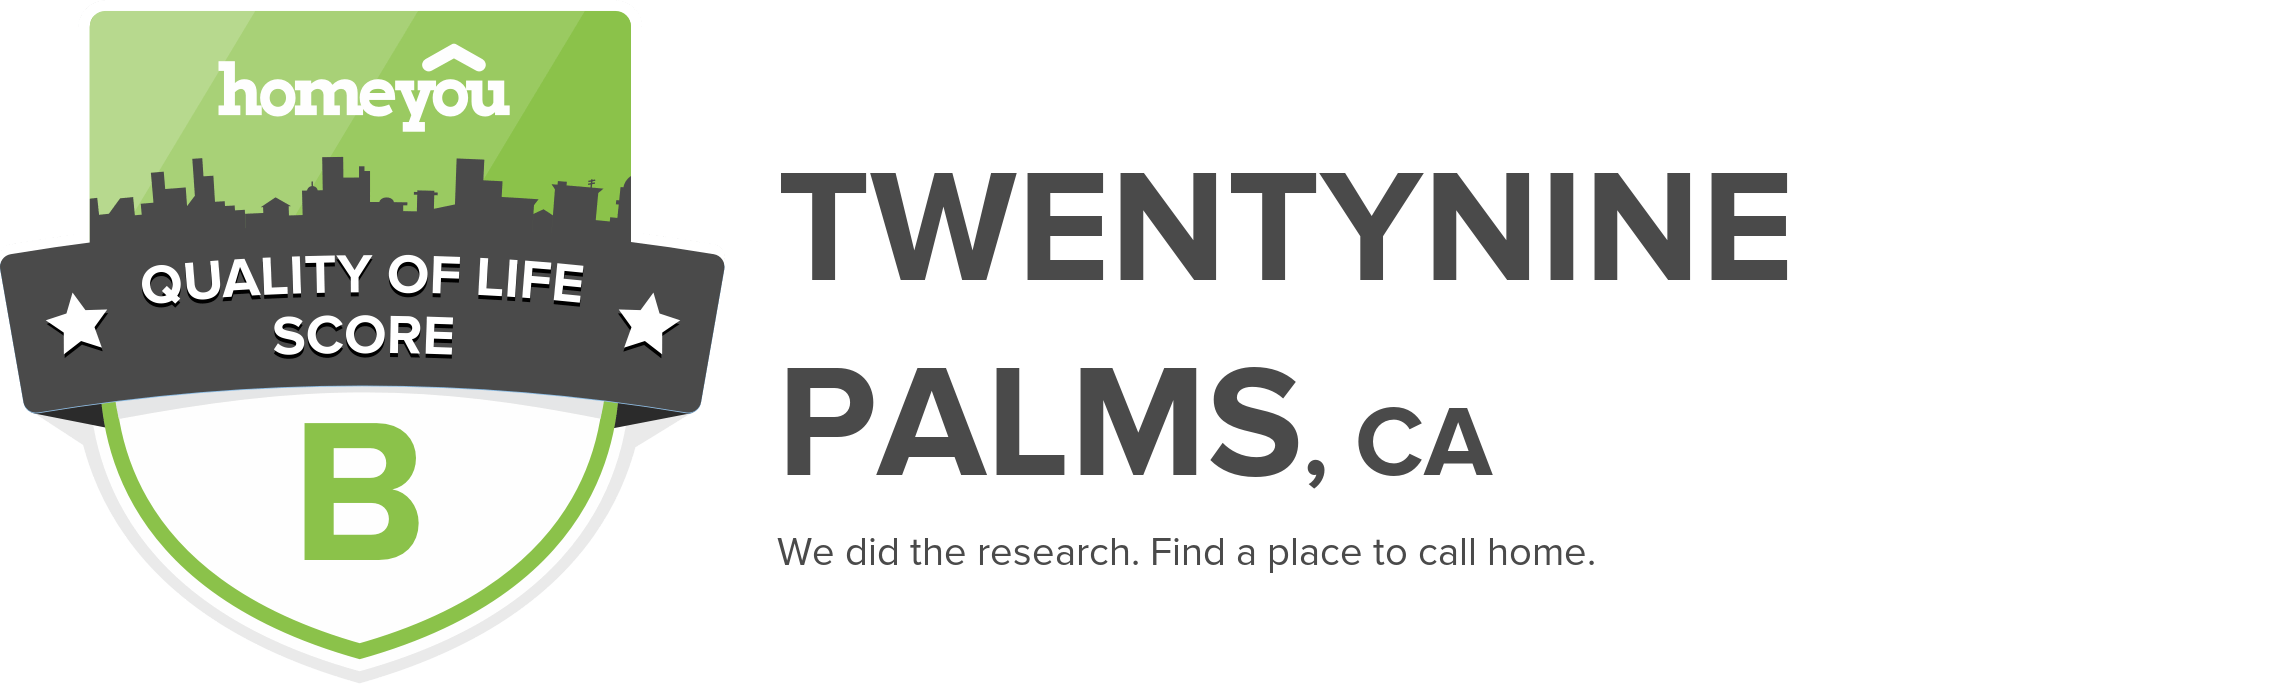 Twentynine Palms, CA